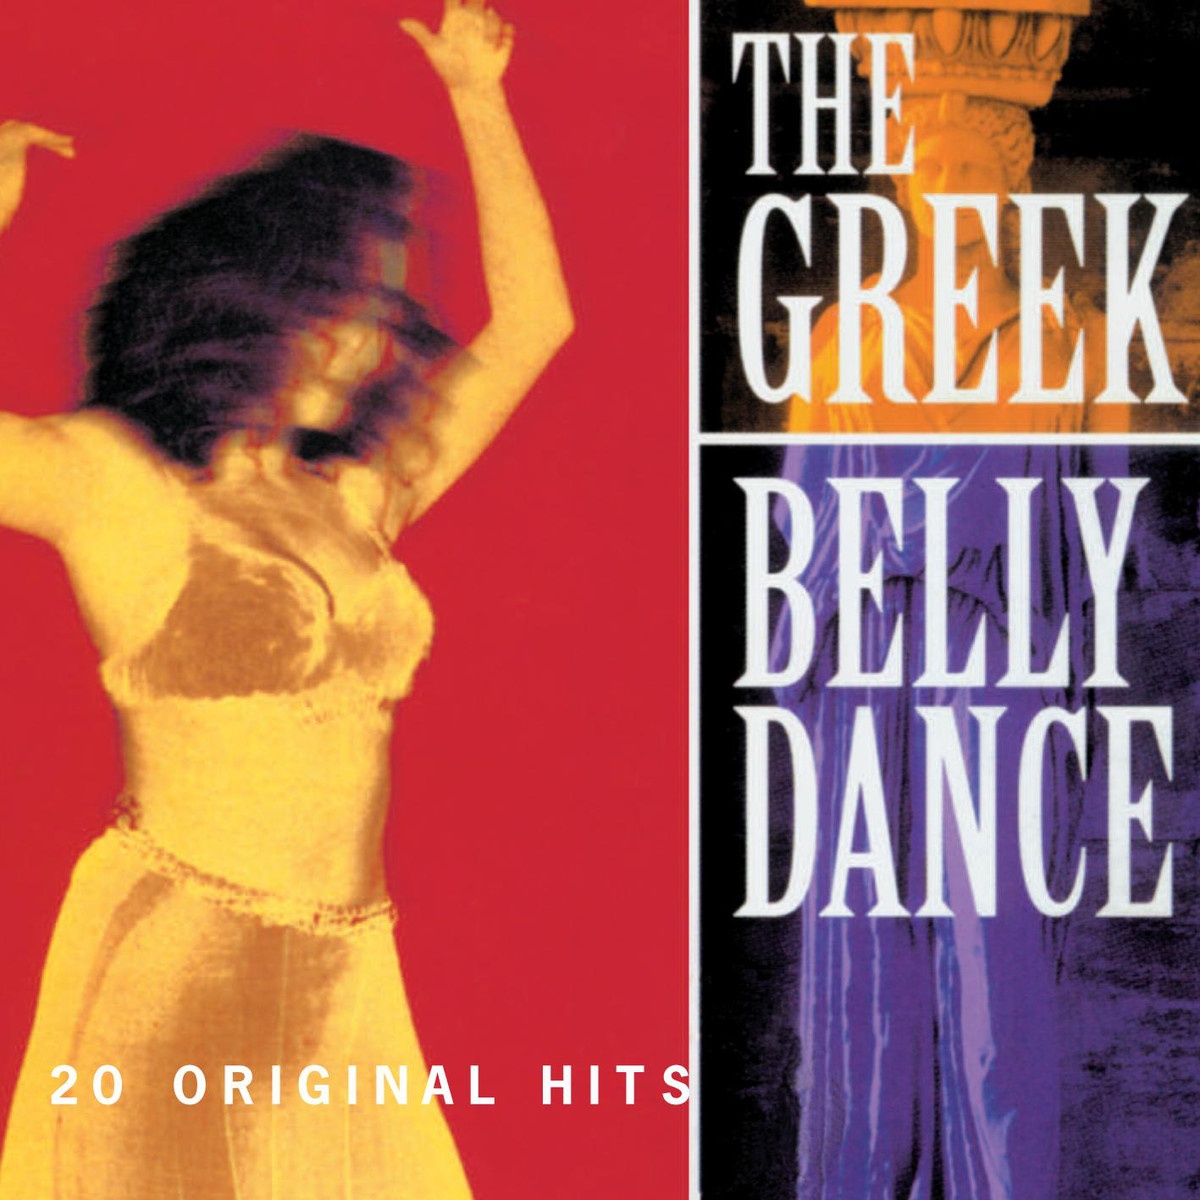 The Greek Belly Dance